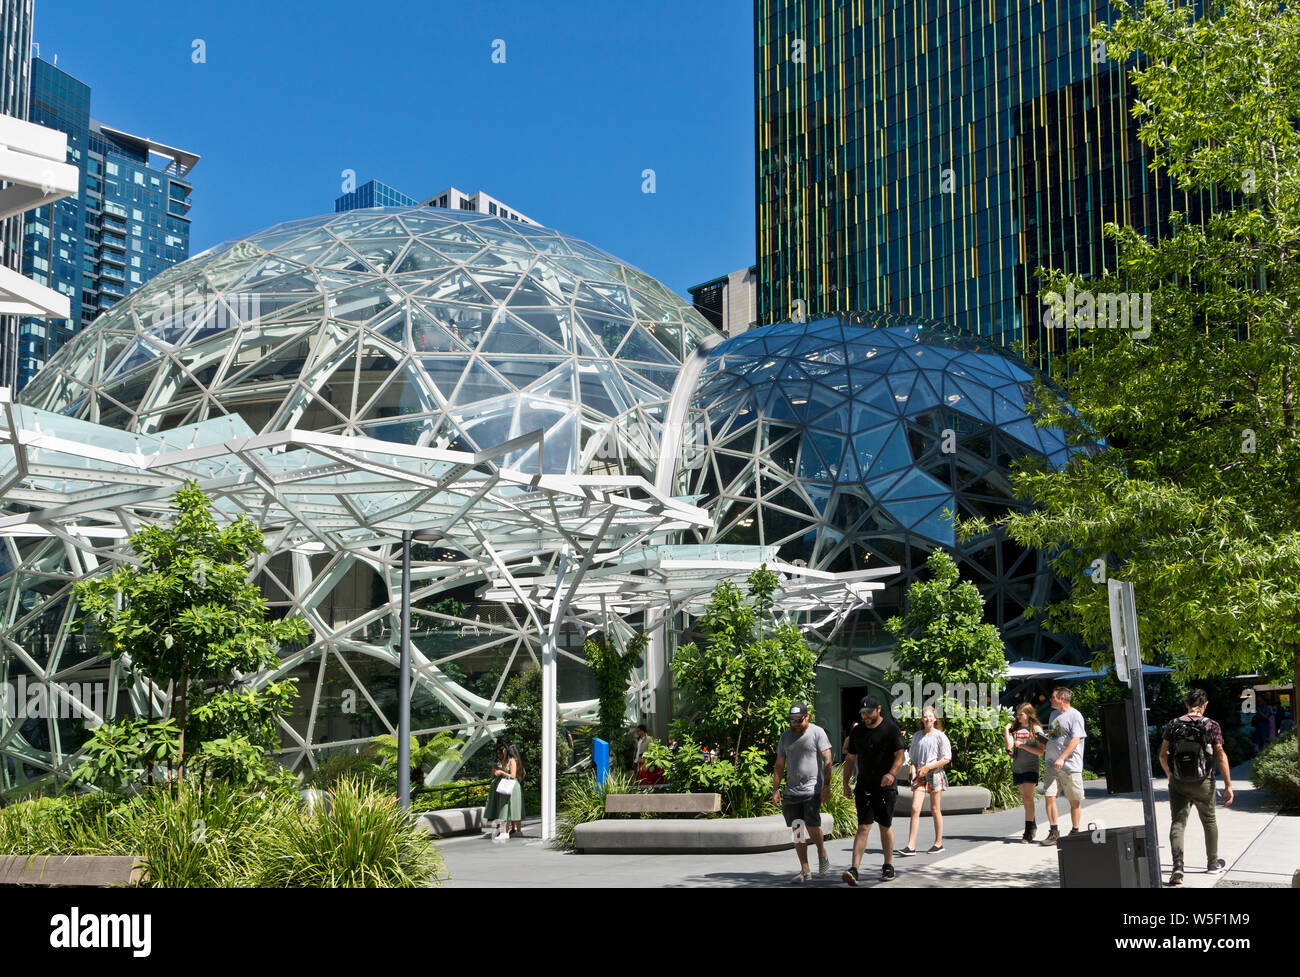 Architektonische Sphären außerhalb von Amazon Hauptsitz in Seattle, Washington, USA. Stockfoto